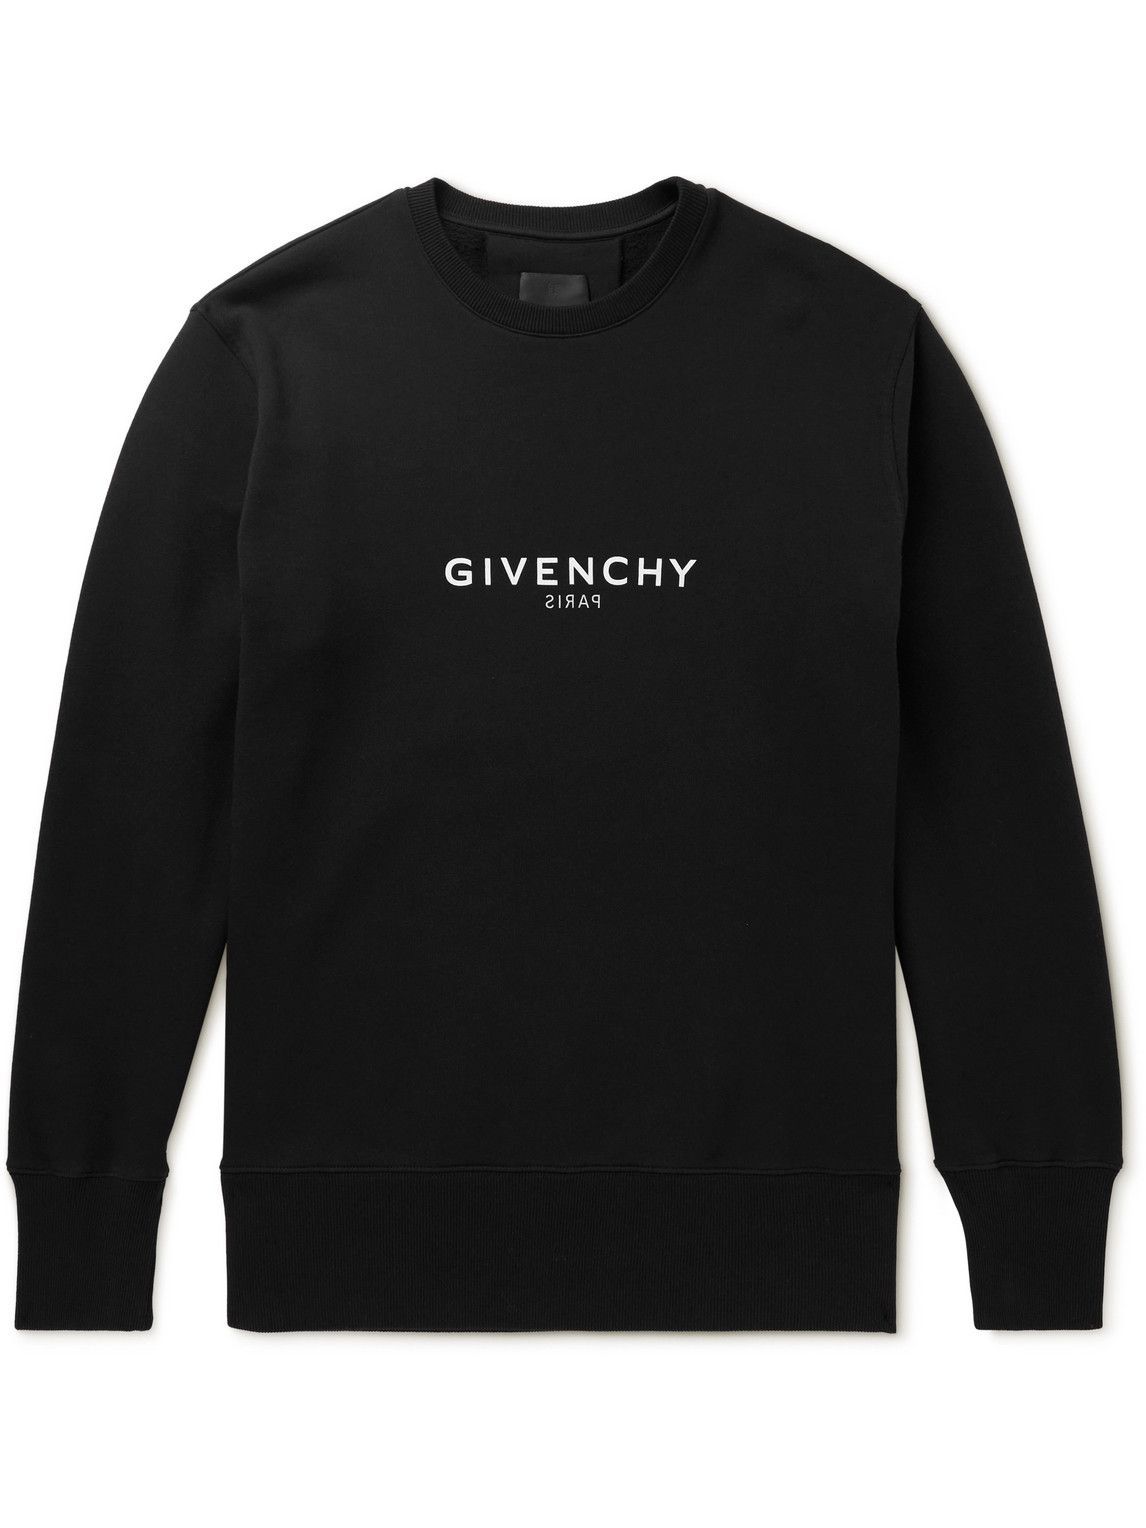 Givenchy - Logo-Print Cotton-Jersey Sweatshirt - Black Givenchy